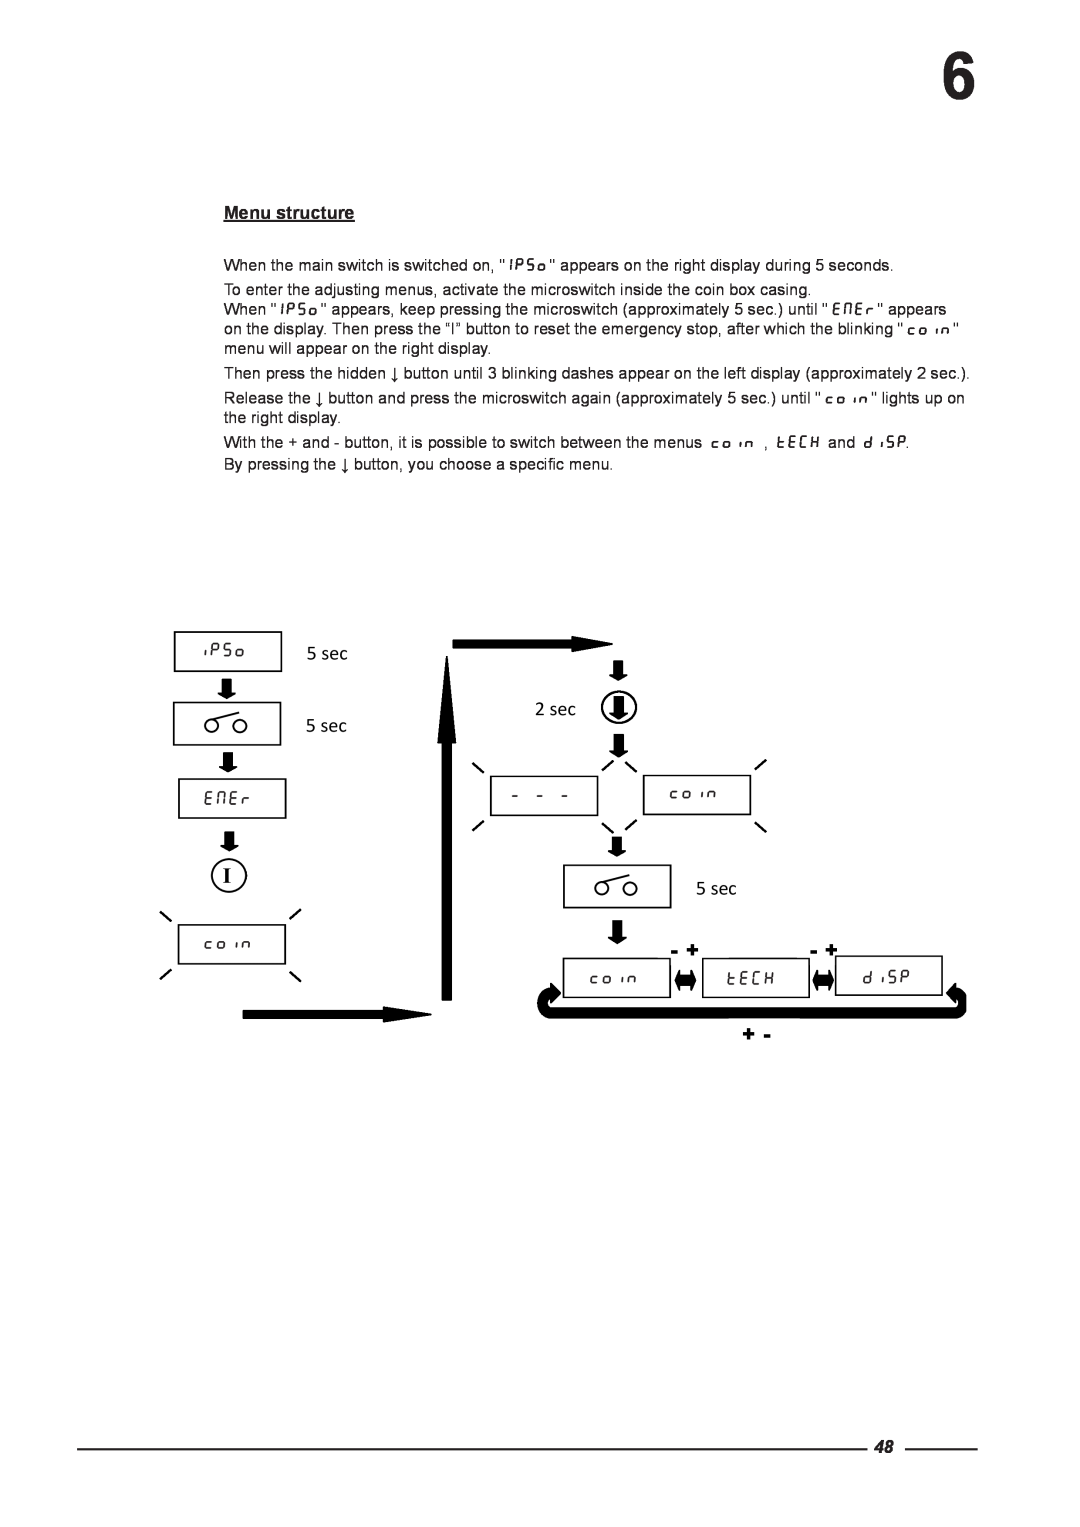 Alliance Laundry Systems CI 1650/325, CI 2050/325 instruction manual 2 sec, Menu structure, +- + +, 5 sec 